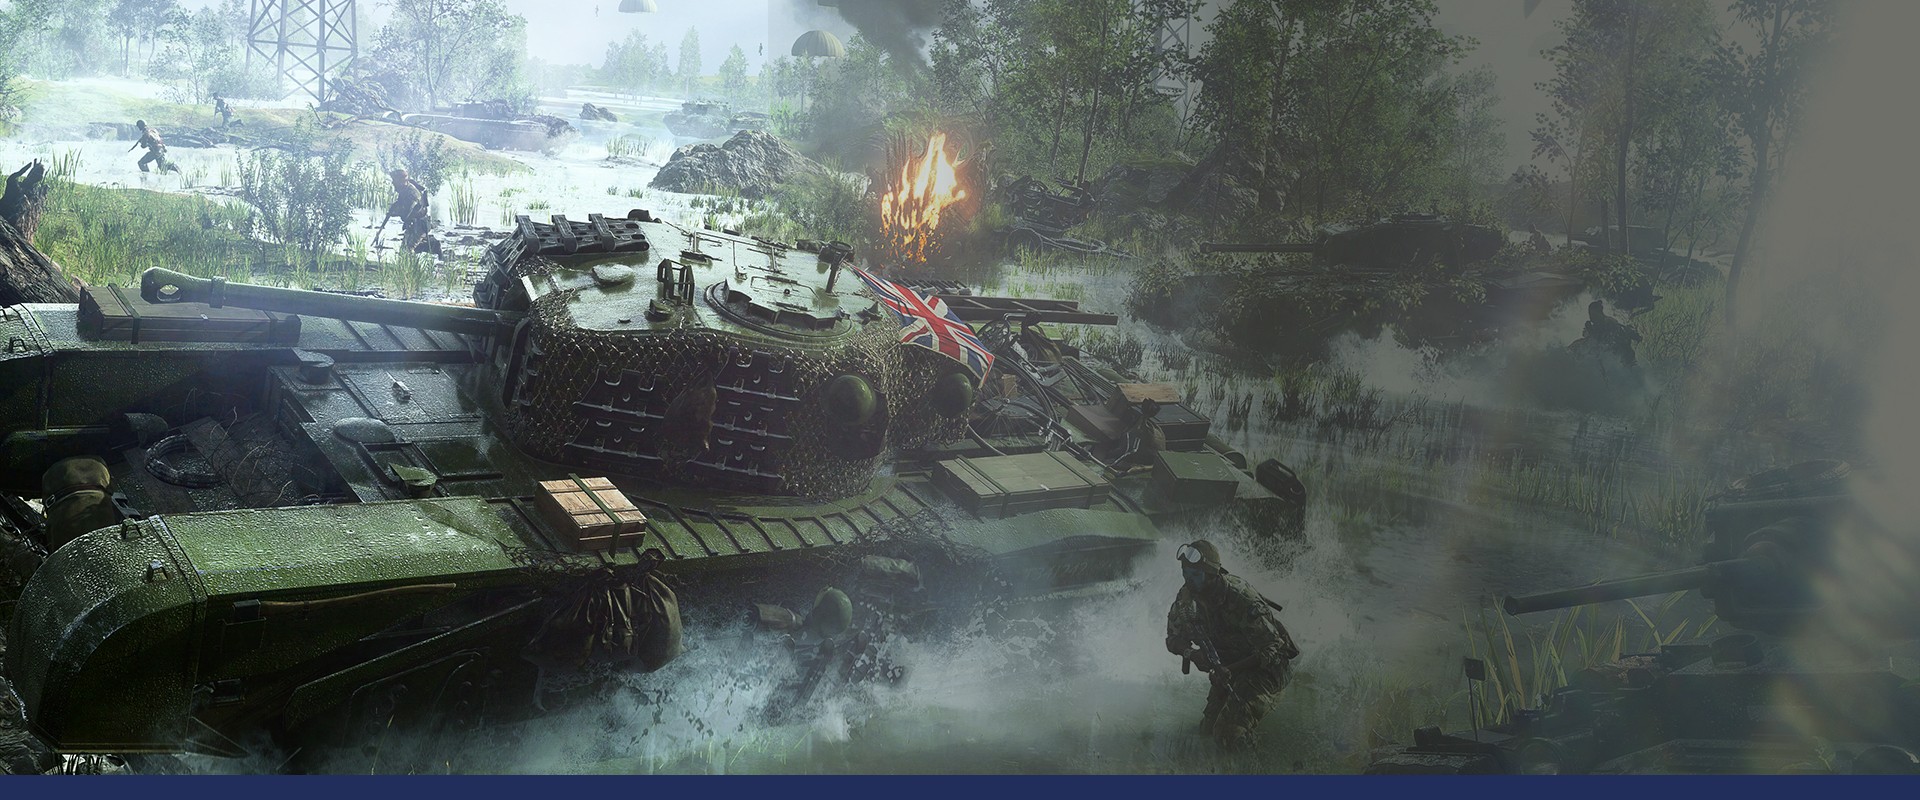 220px-Battlefield_V_standard_edition_box_art Download BATTLEFIELD V For PC - Battlefield V Microsoft Windows Edition (OFFICIAL VIDEO GAME)